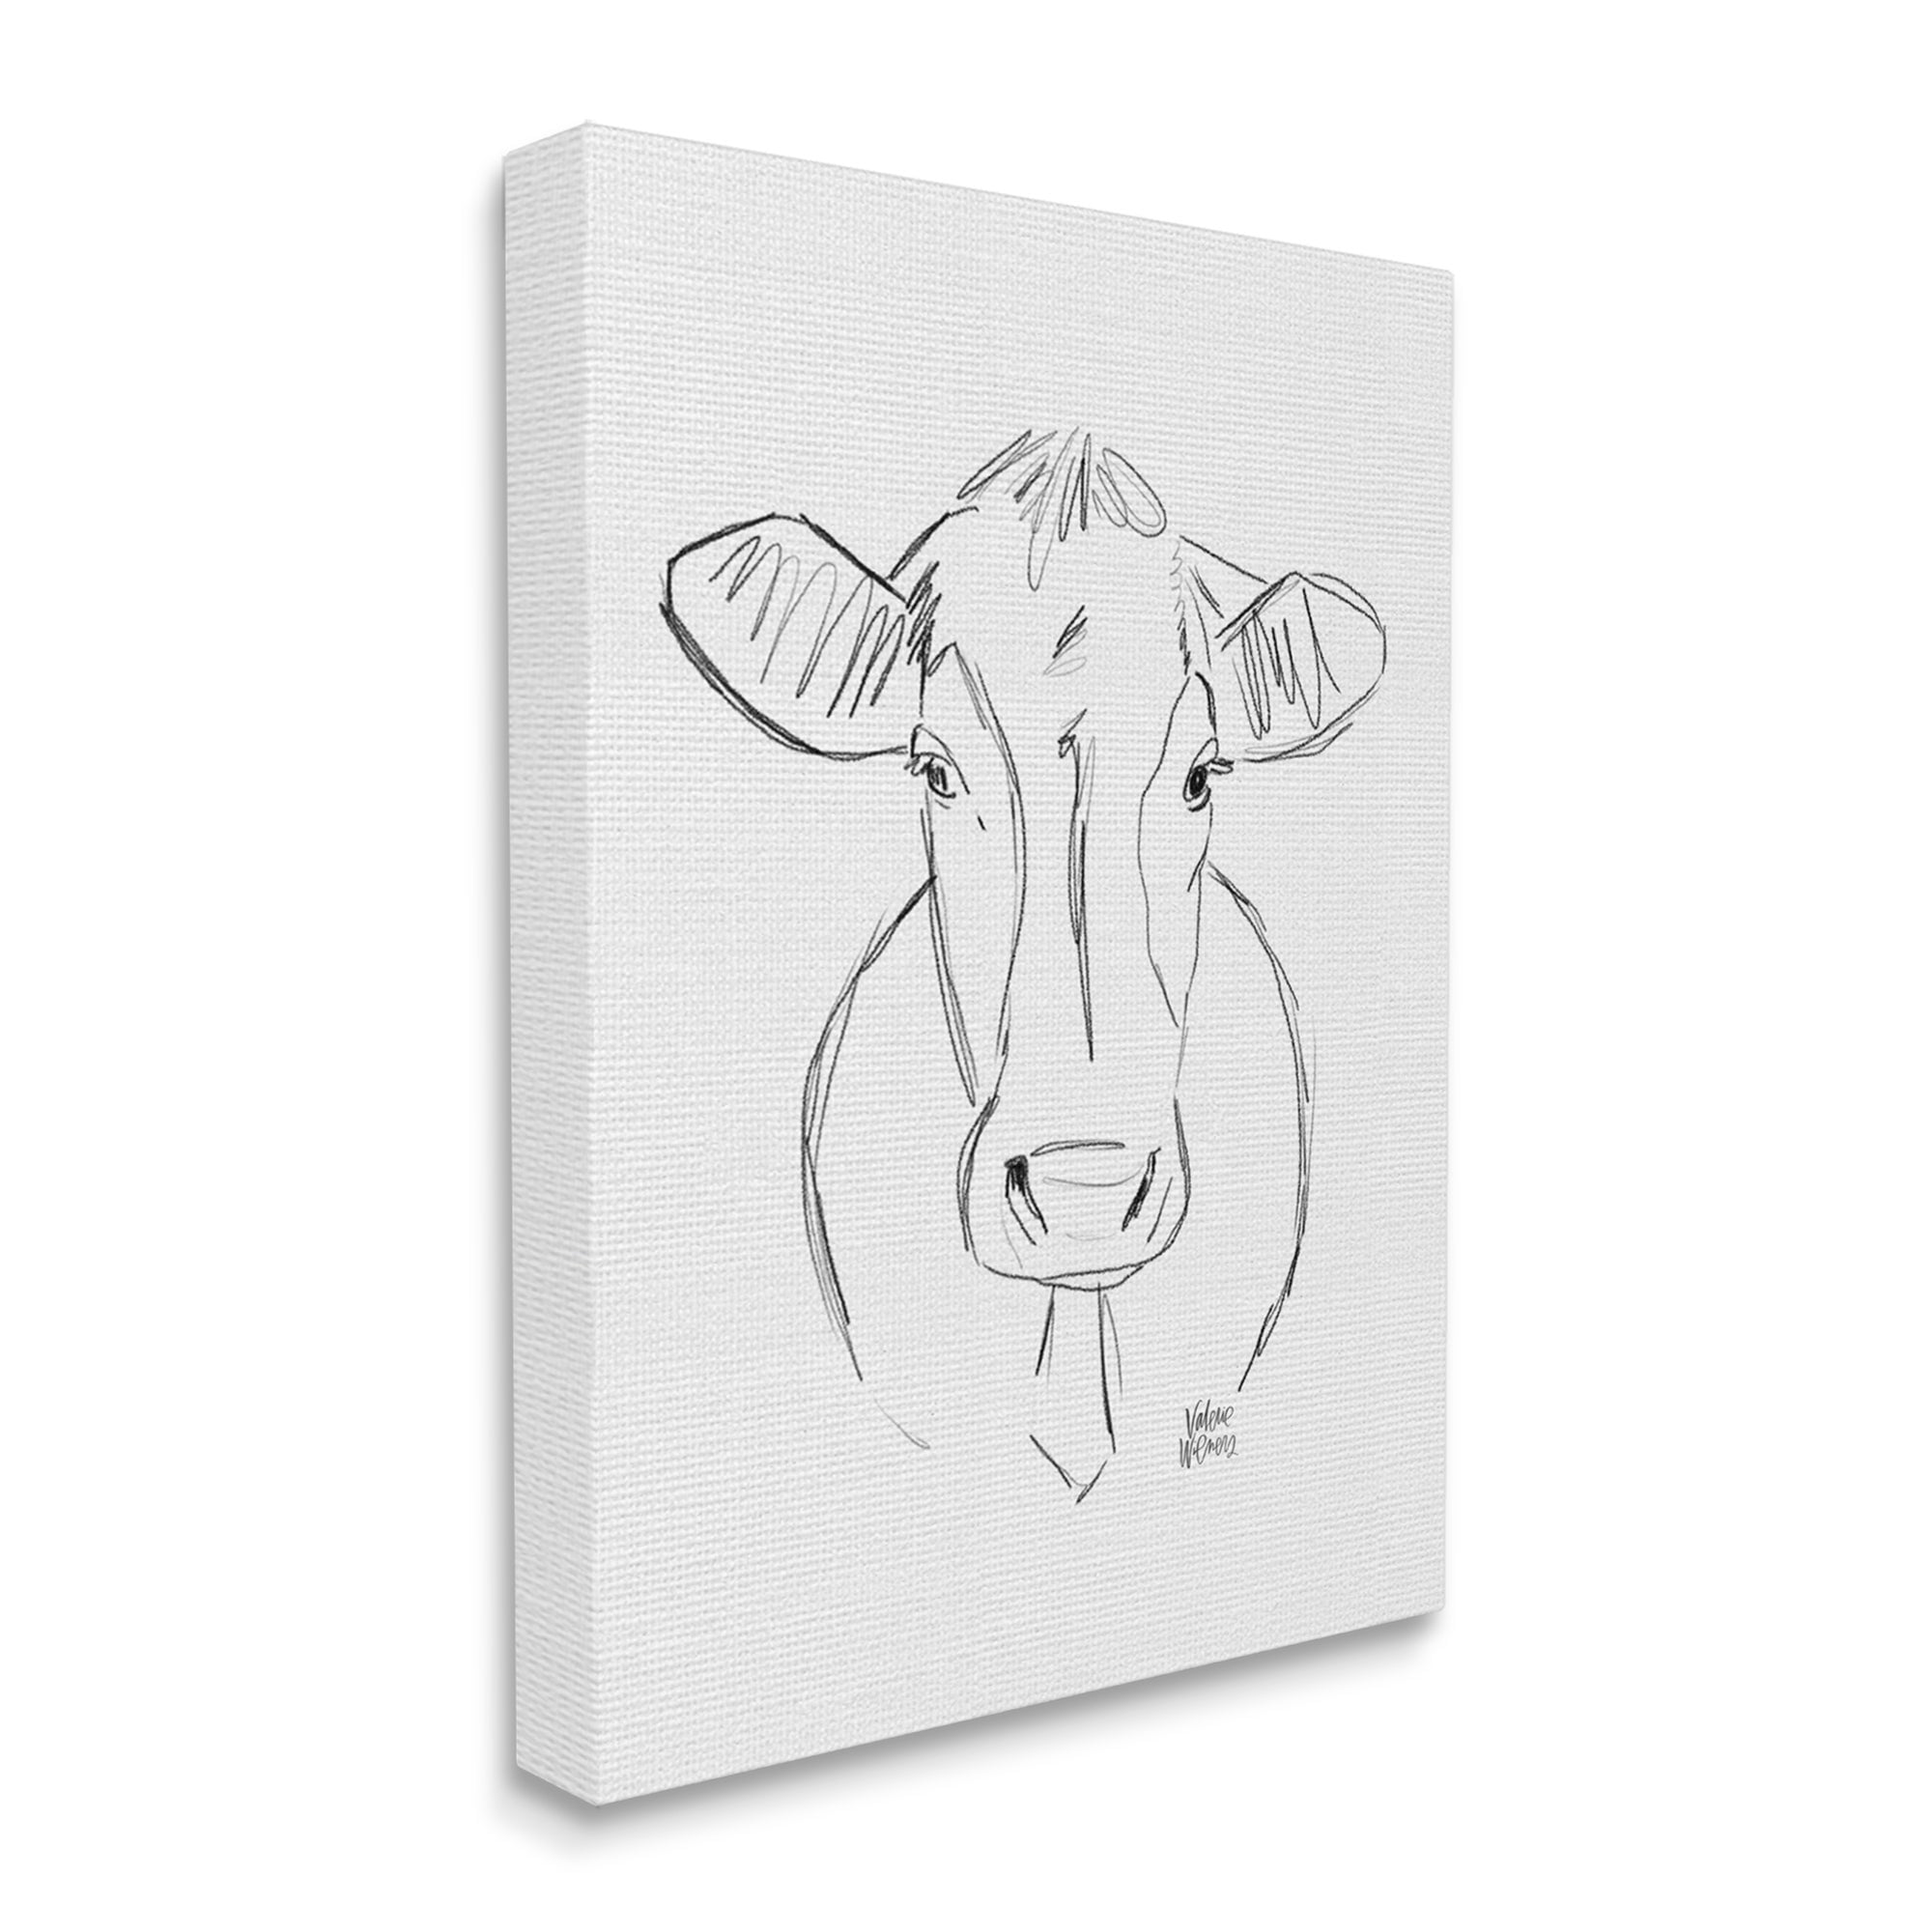 71,602 Cow Draw Vector Images, Stock Photos & Vectors | Shutterstock